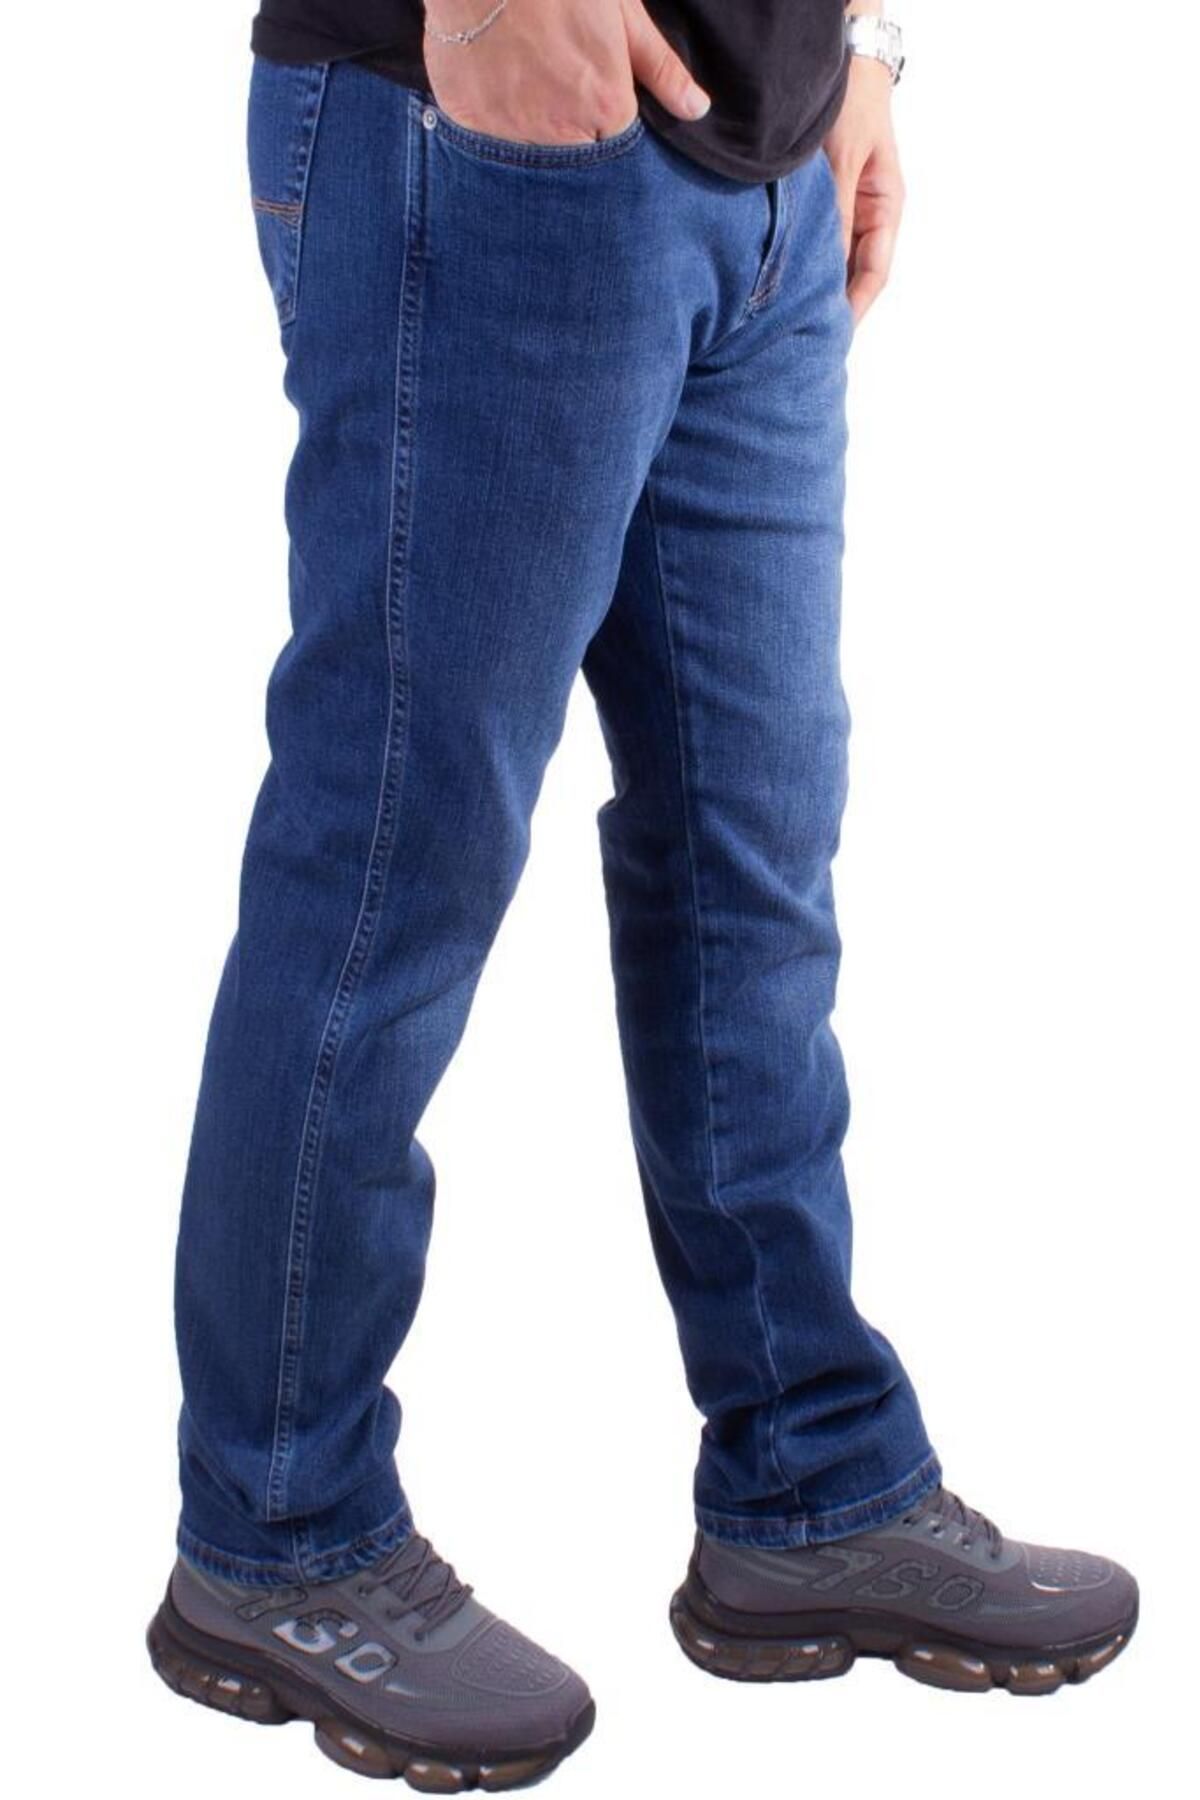 Twister Jeans Twister Vegas 132-271 Mavi Yüksek Bel Rahat Paça Erkek Jeans Pantolon